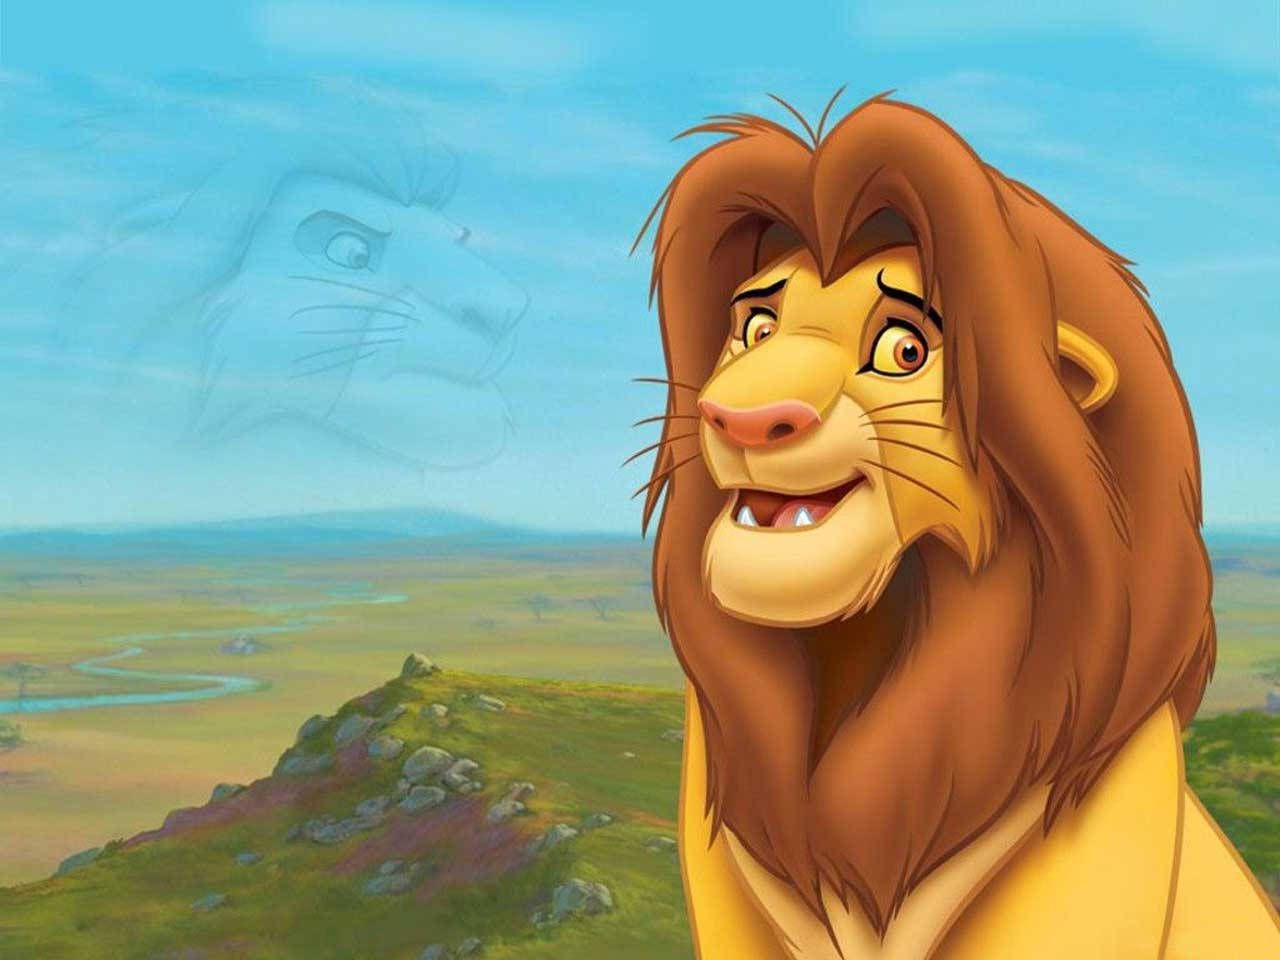 Free Lion King Wallpaper Downloads, Lion King Wallpaper for FREE